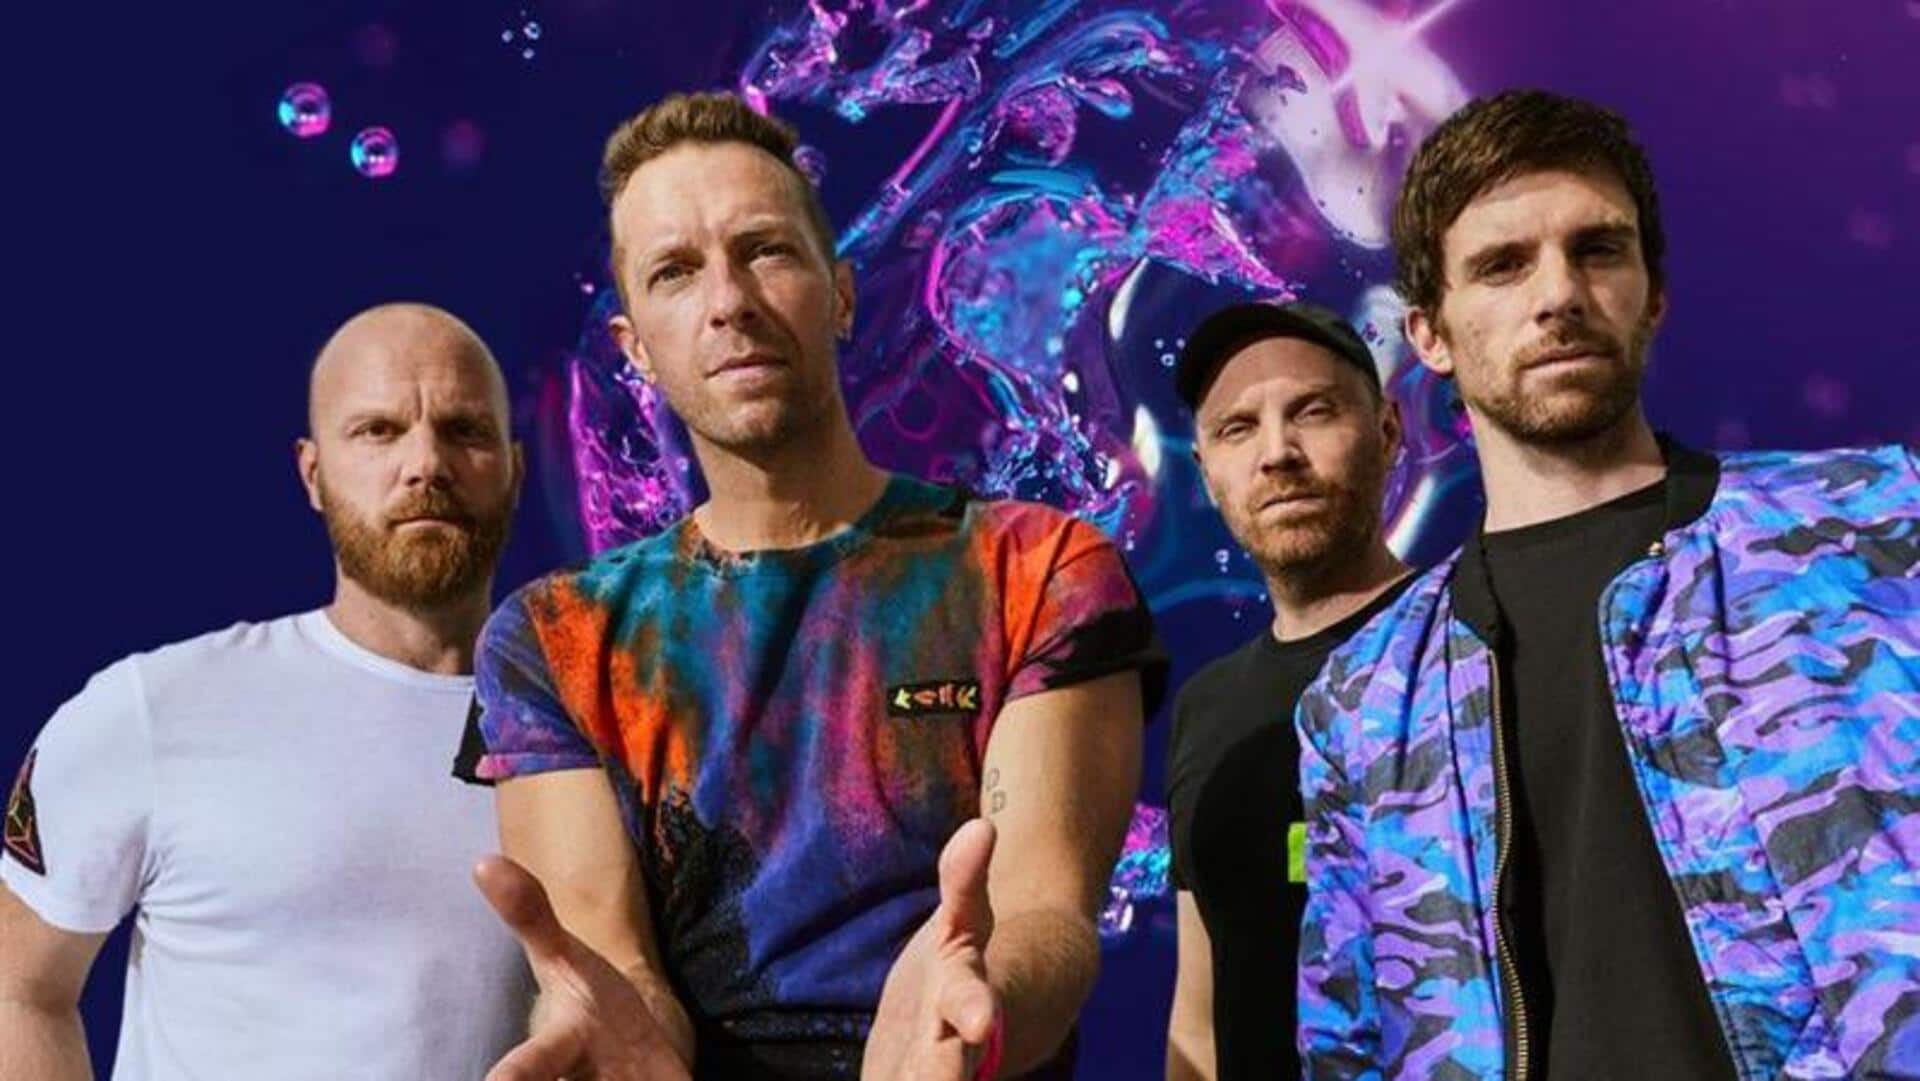 Manila's traffic makes Coldplay's Chris Martin write an impromptu song